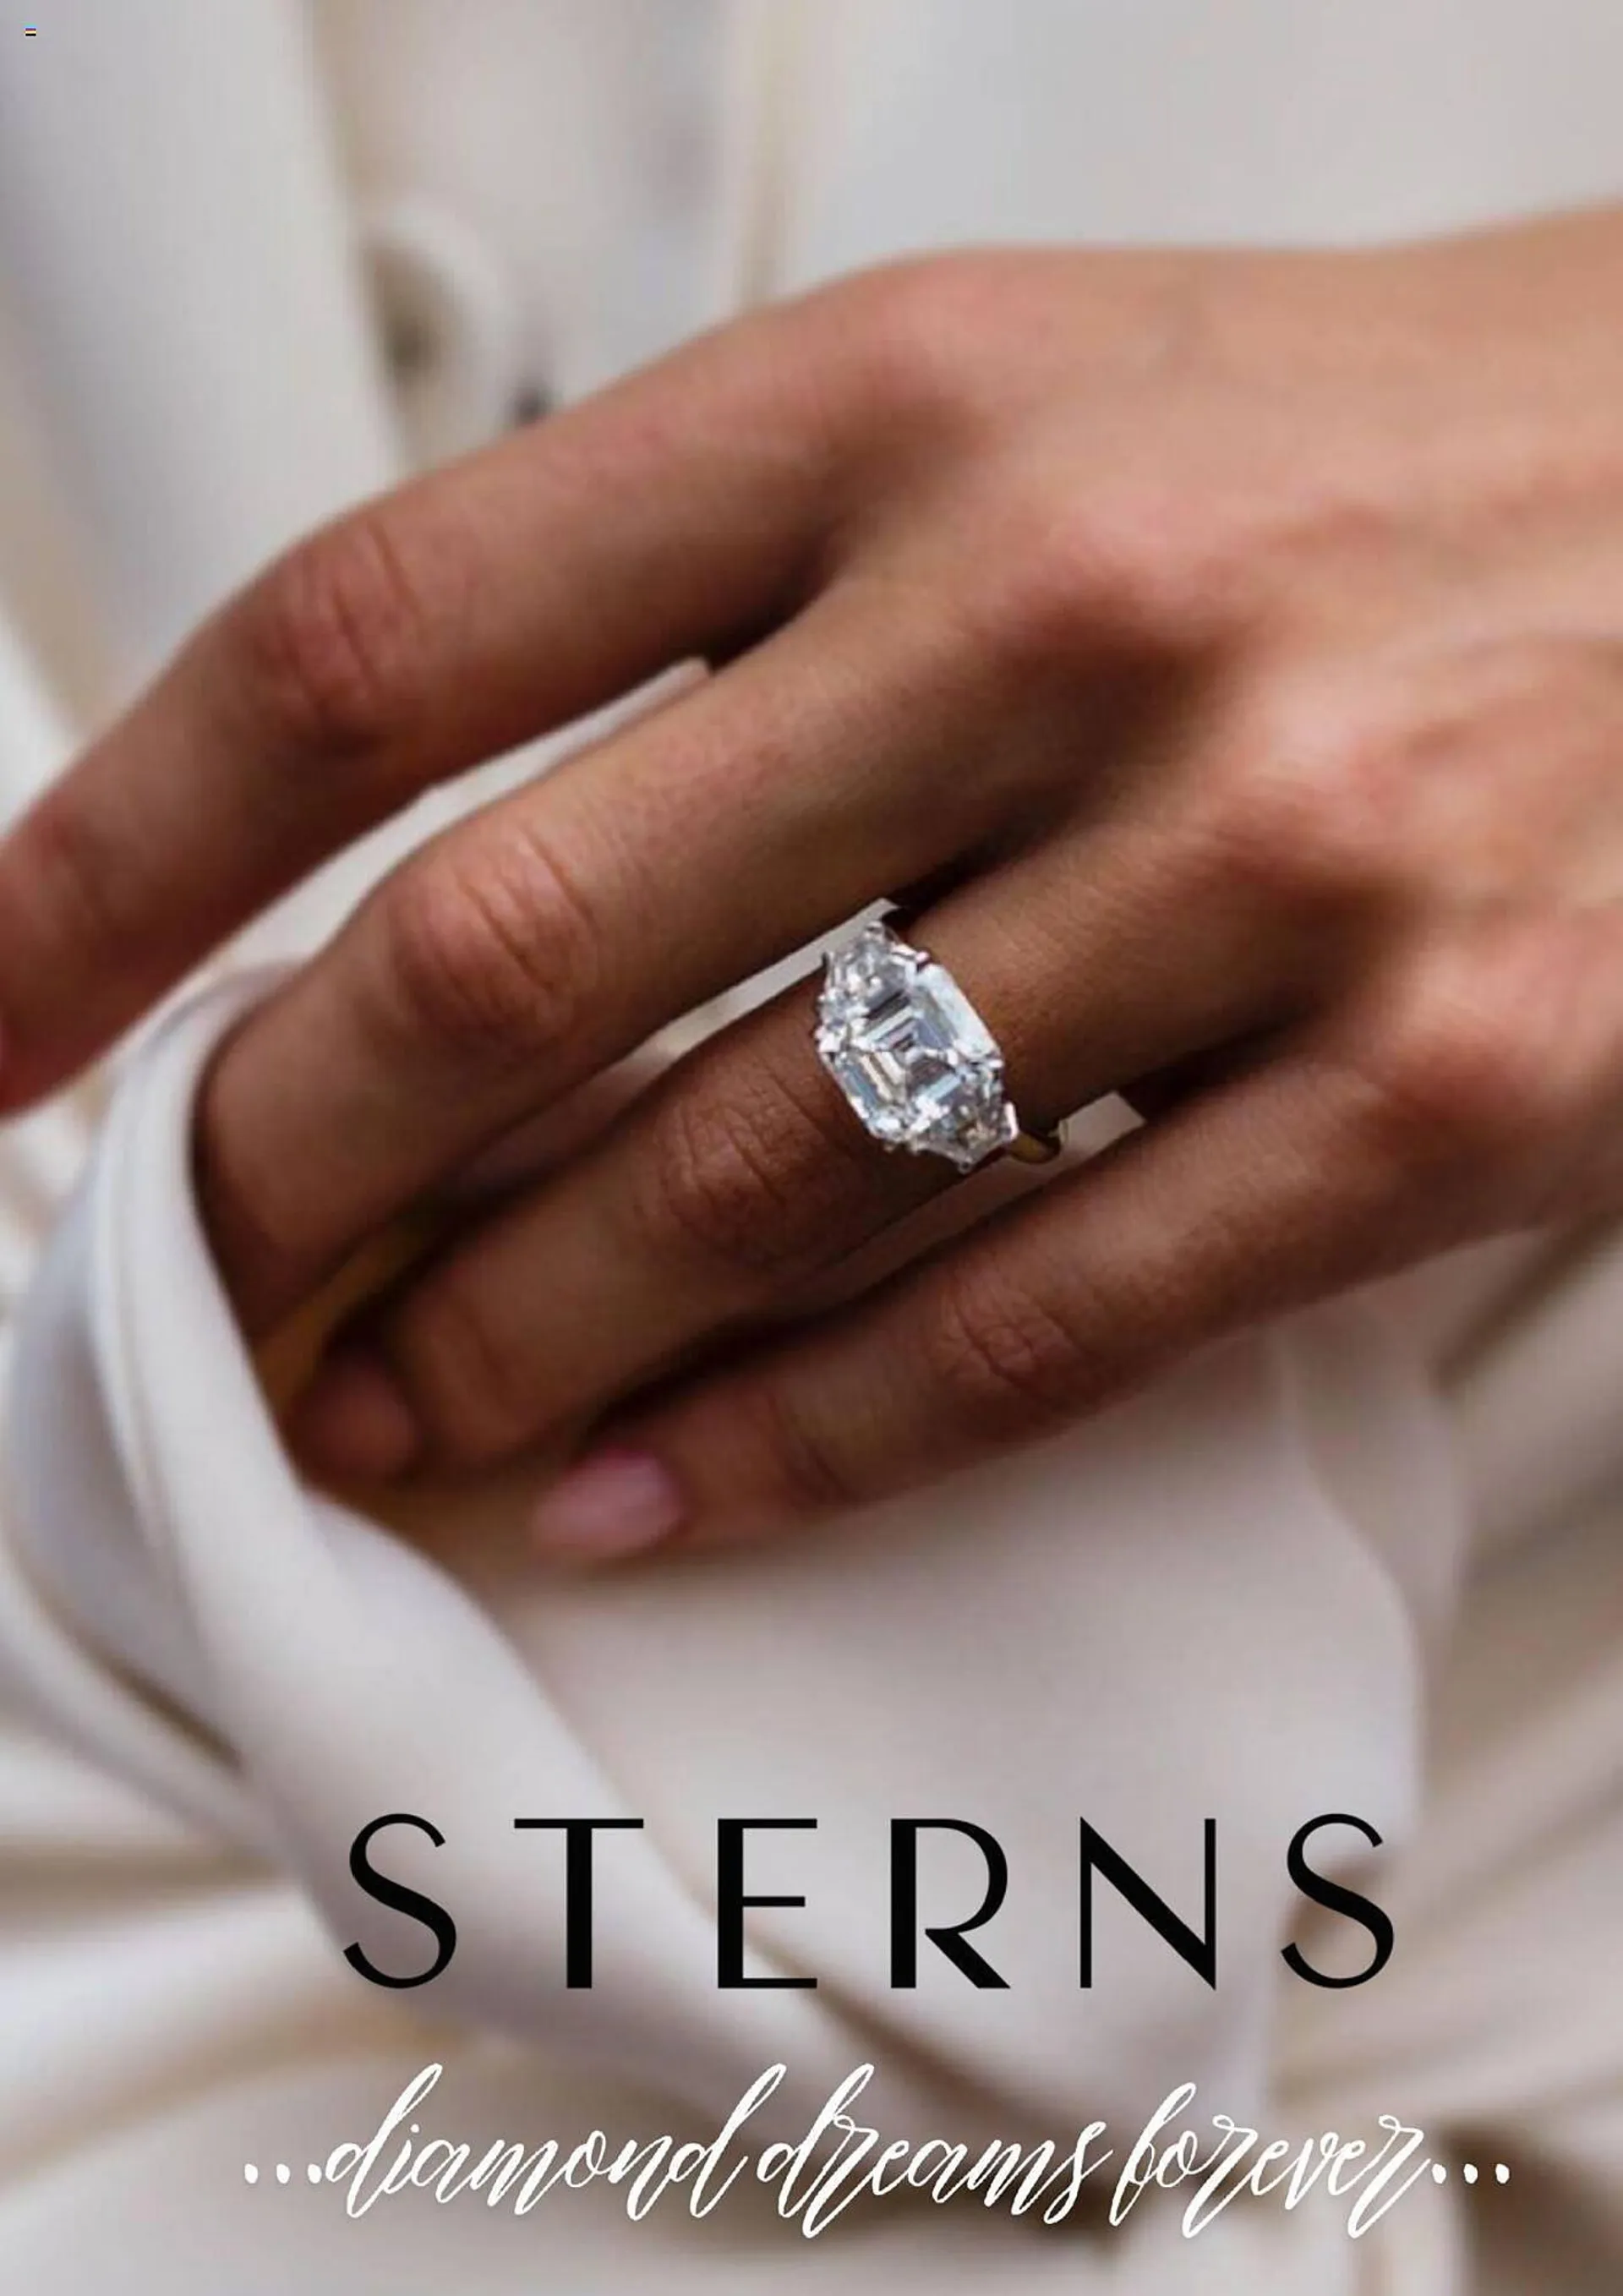 Sterns catalogue - 1